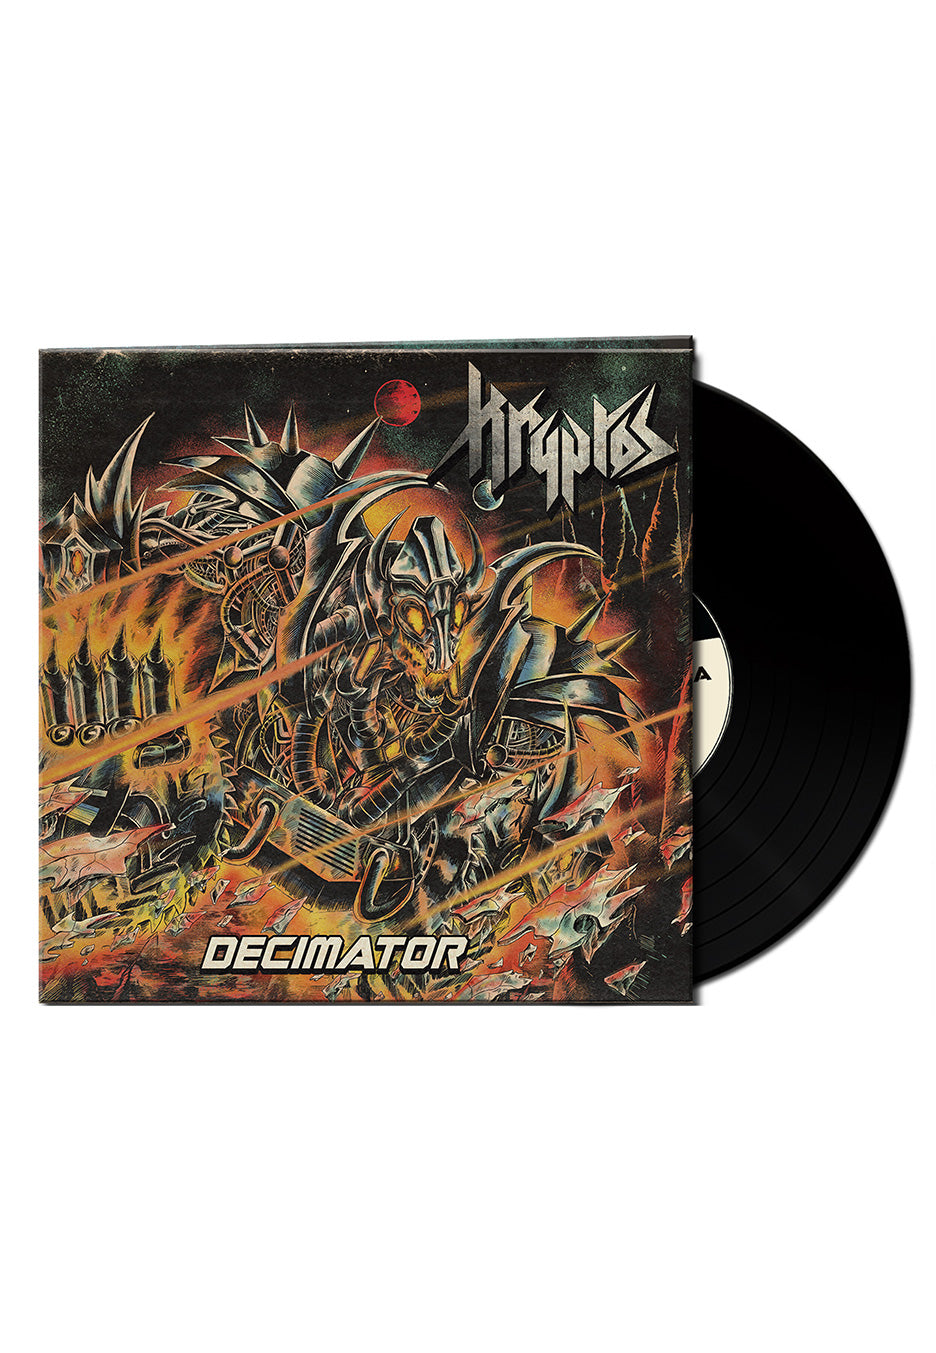 Kryptos - Decimator Ltd. Edition - Vinyl